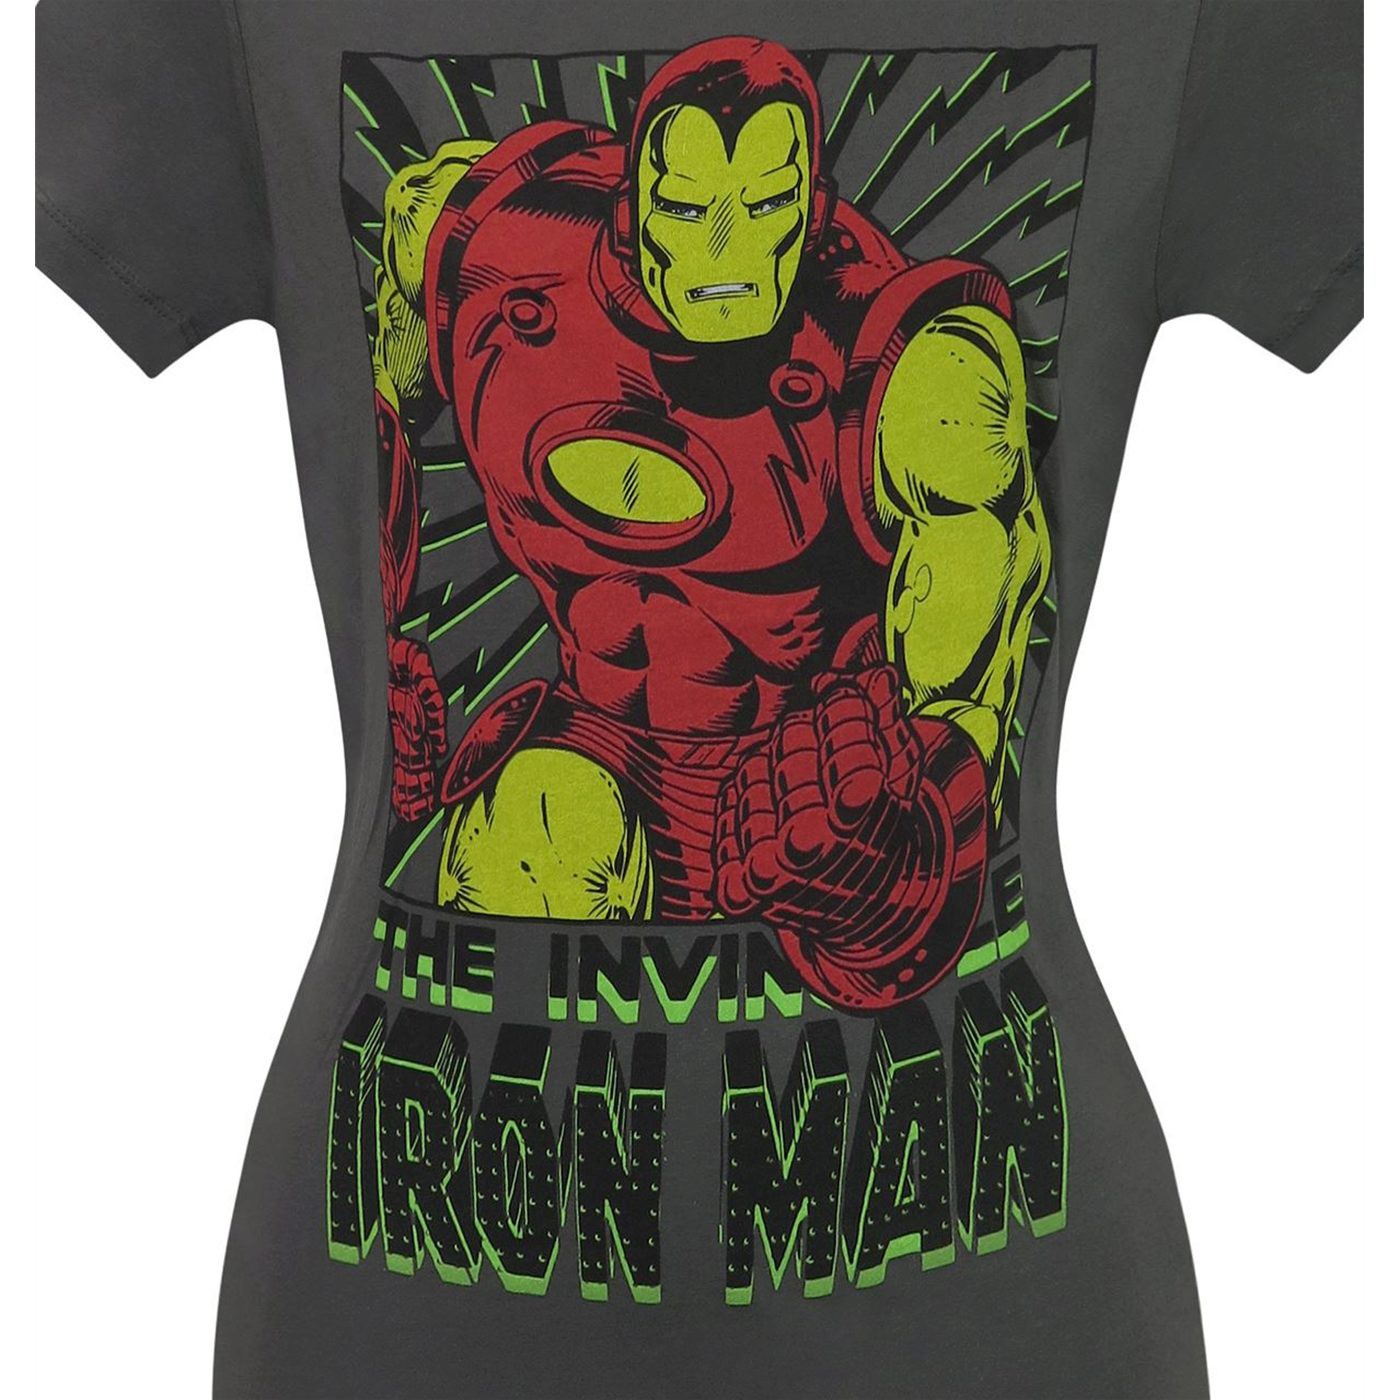 Iron Man Vintage Black Bolts Women's T-Shirt